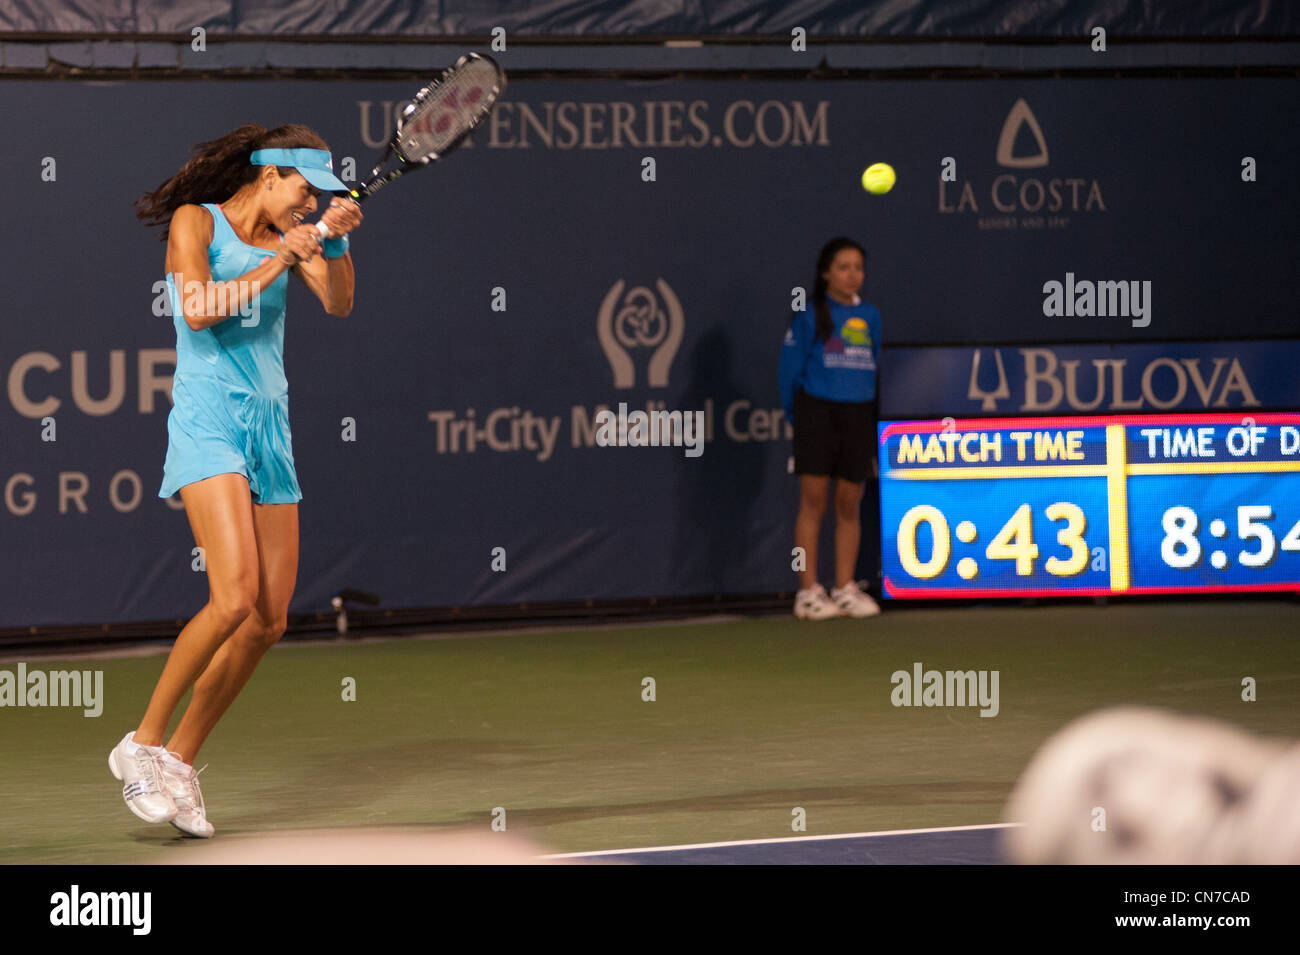 Tennis player, Ana Ivanovic, returns shot at La Costa Resort during the Mercury Insurance Open. Stock Photo